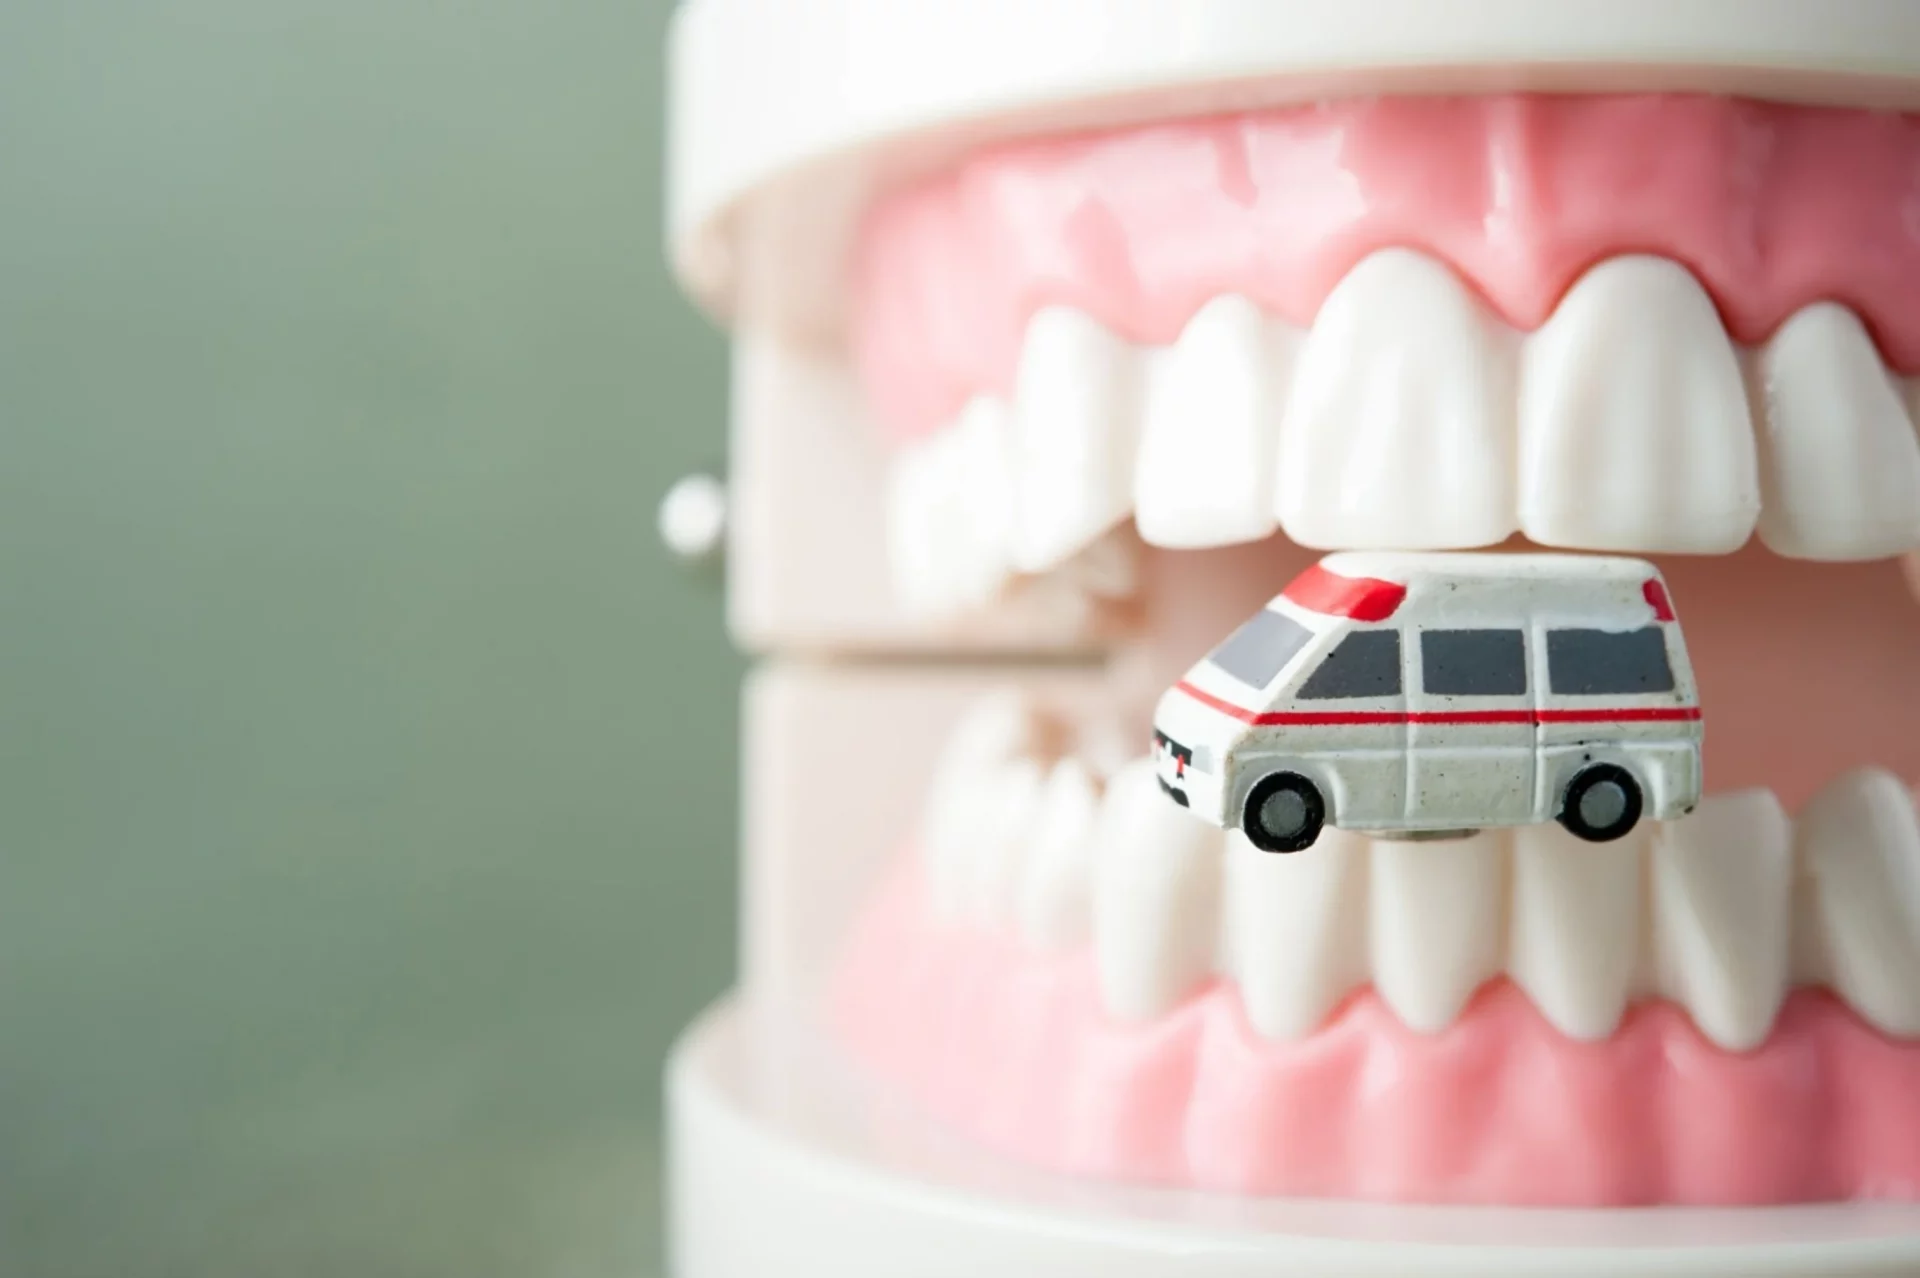 Emergency Dentist in Tempe